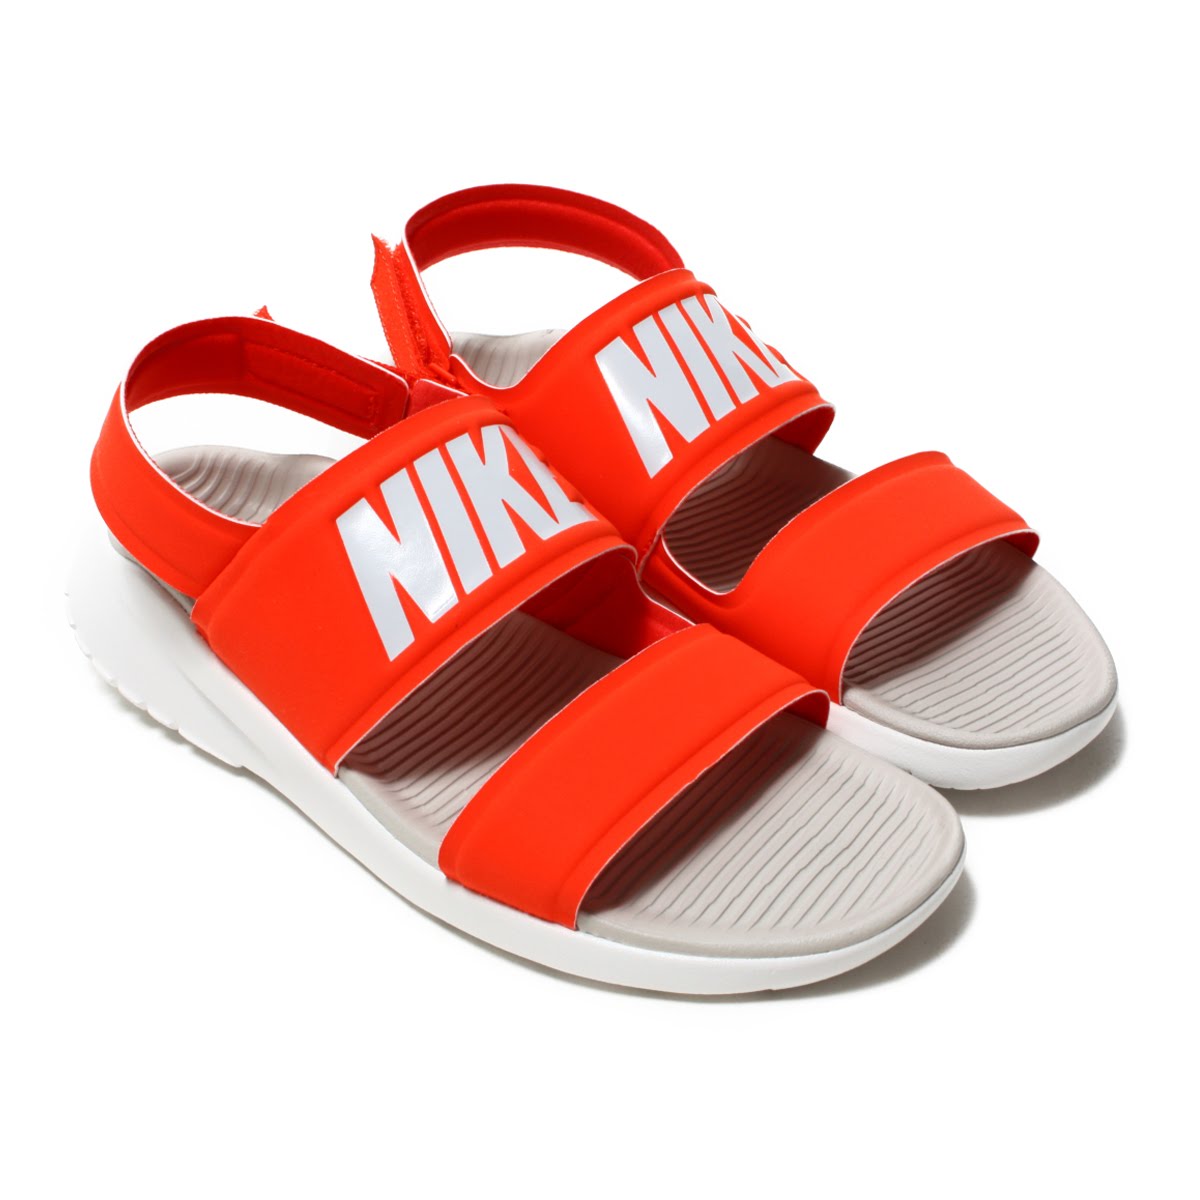 nike tanjun sandals for kids